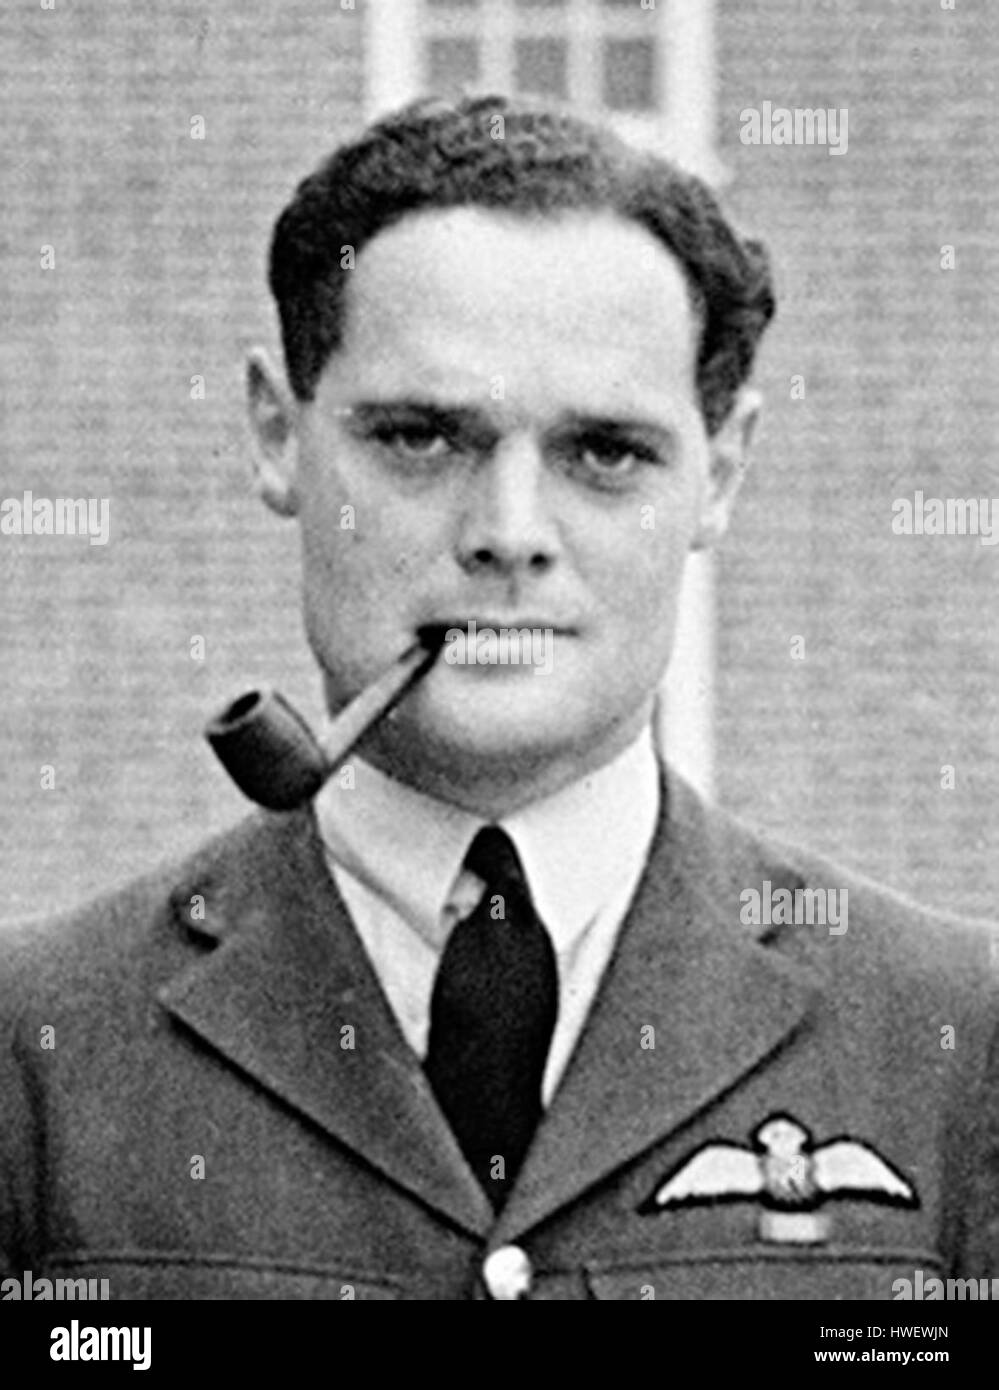 Sir Douglas Bader, flying ace durant la Seconde Guerre mondiale. Banque D'Images